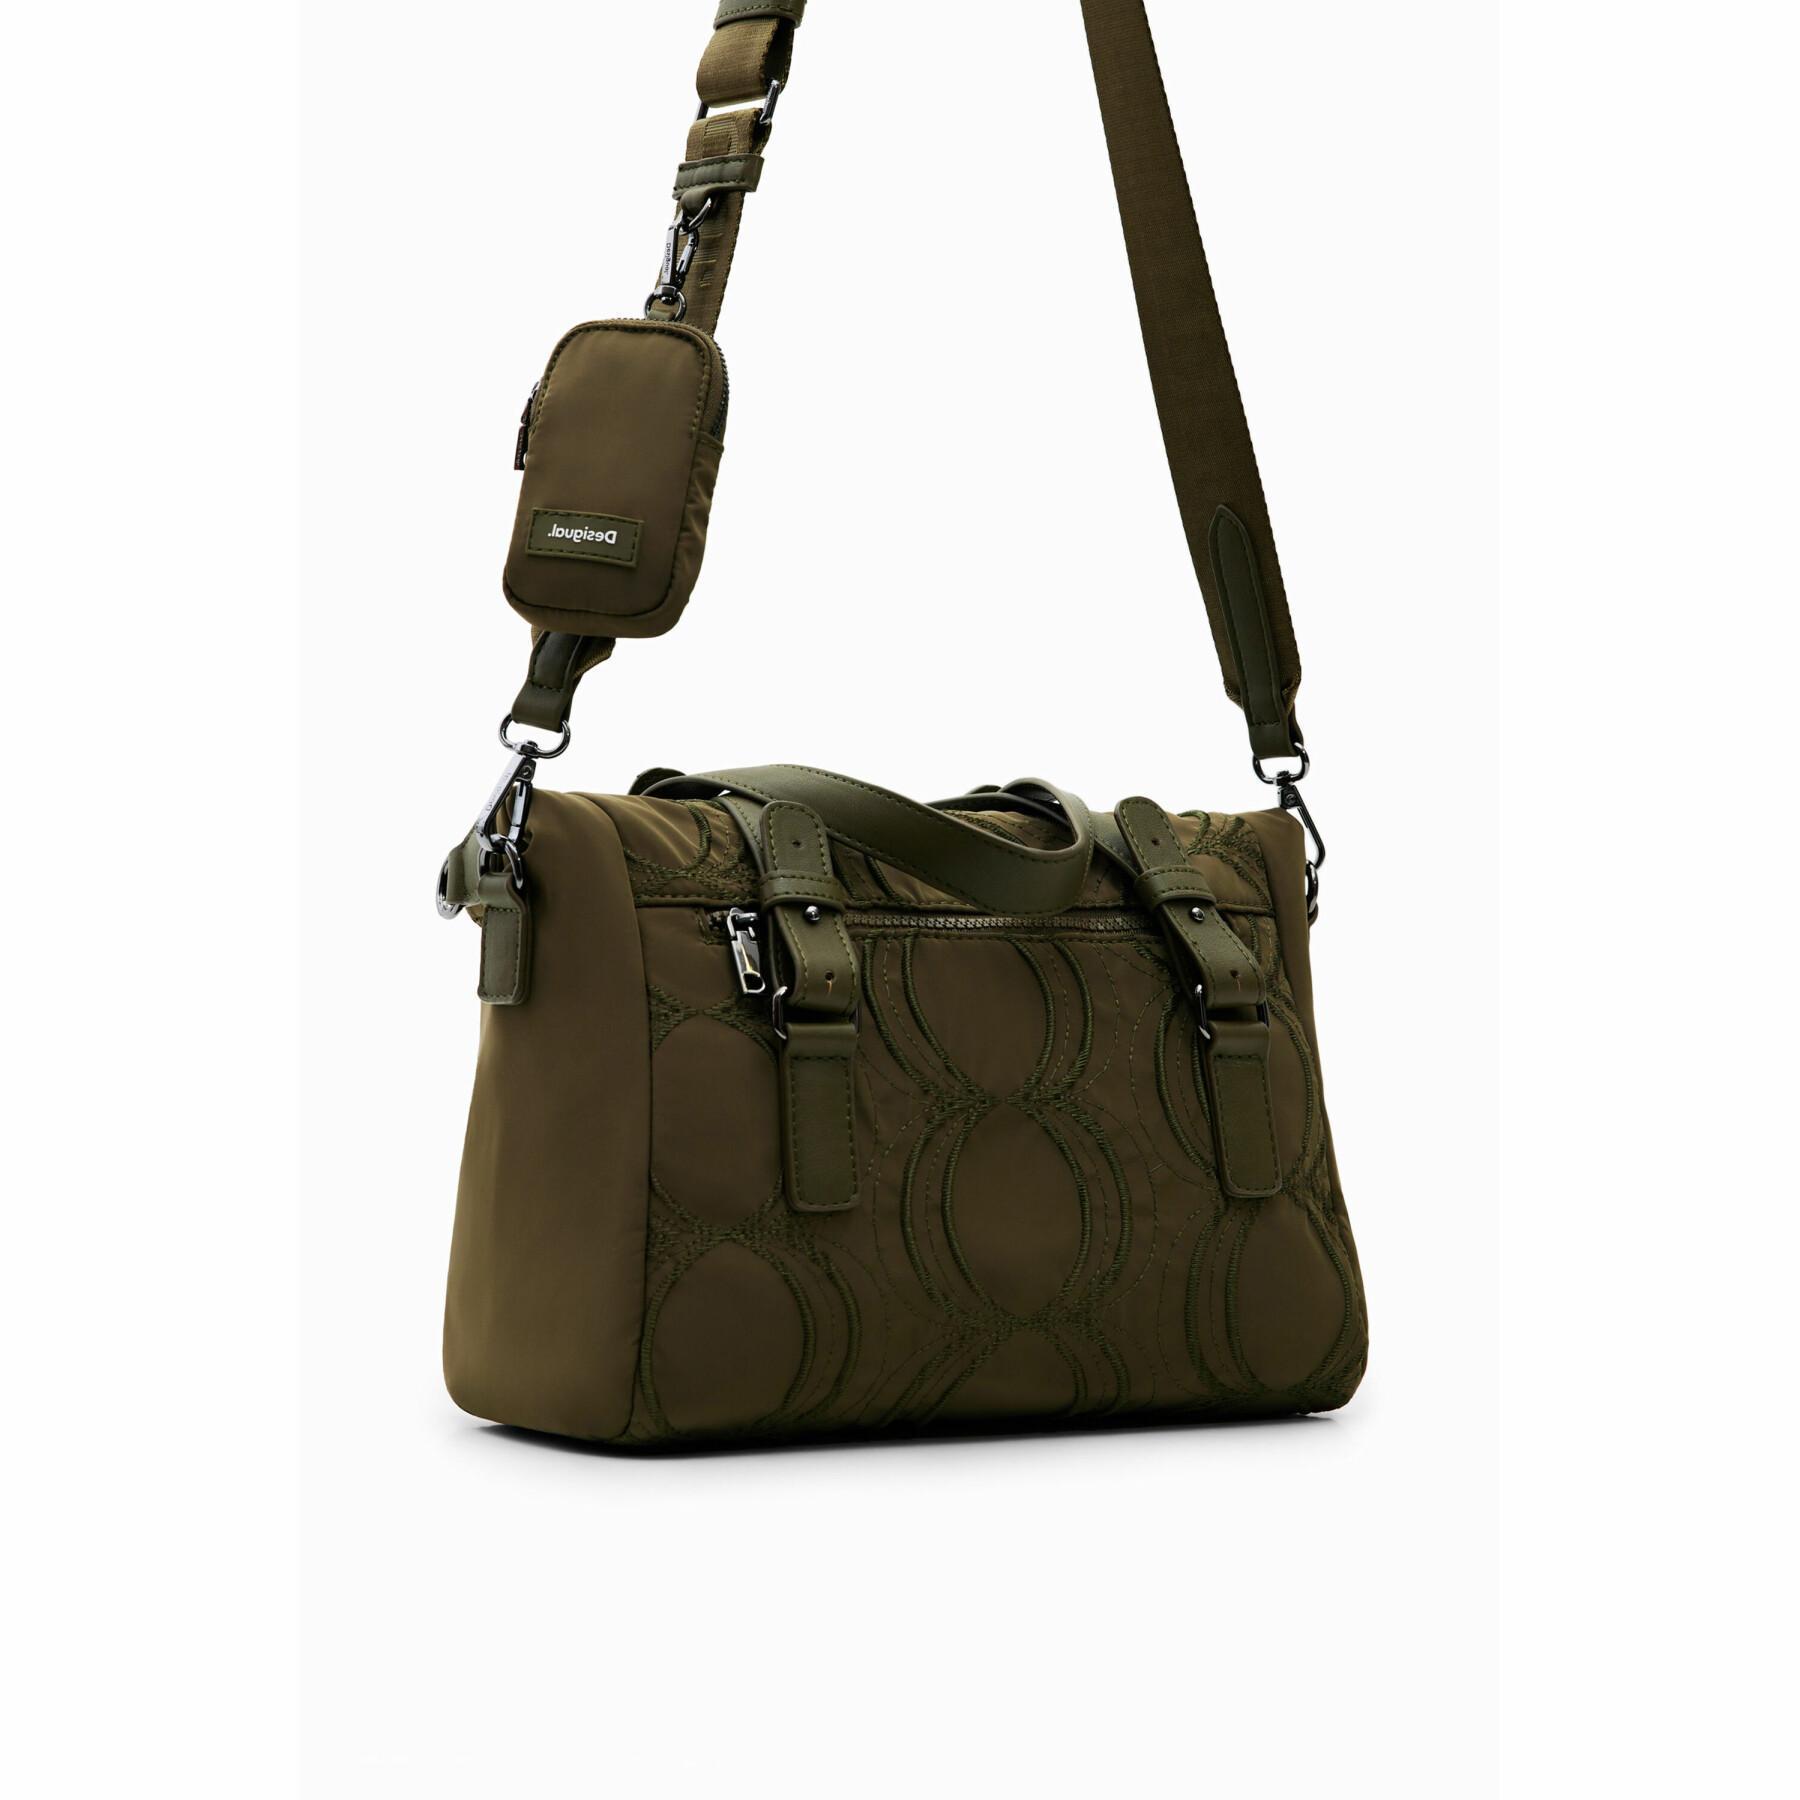 Women's handbag Desigual Loverty 2.0